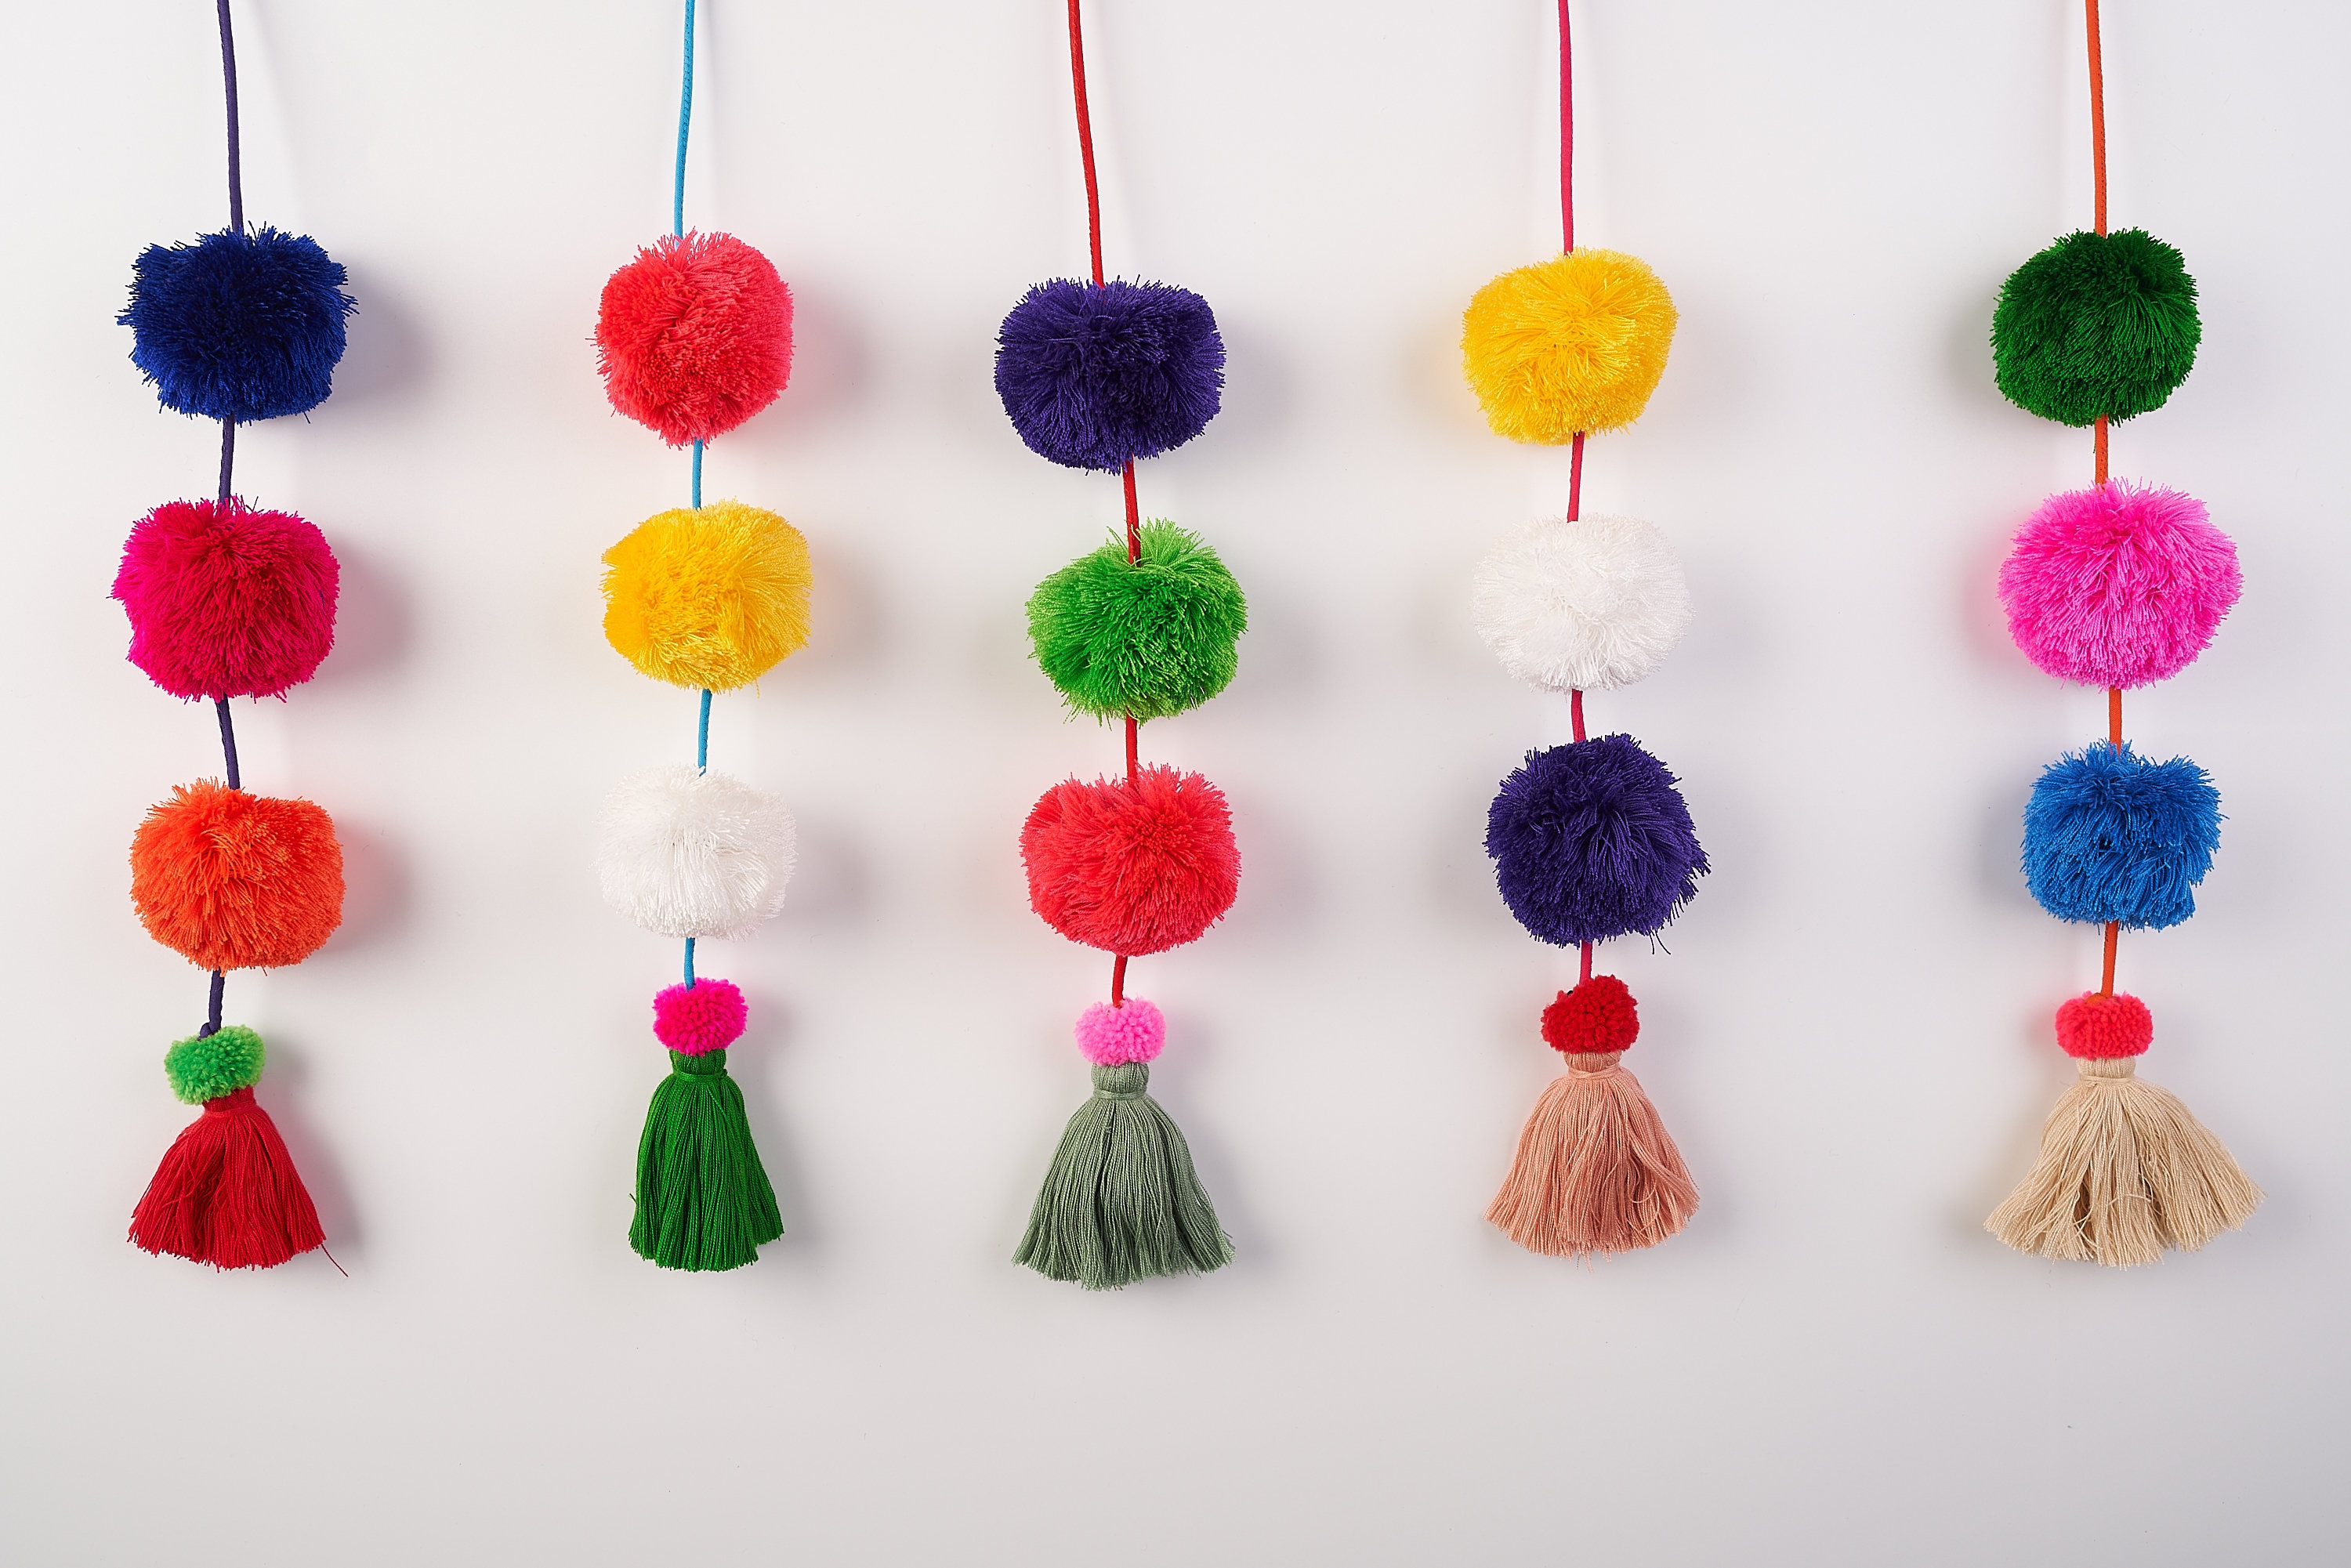 Colourful Tassels Zipper Charm for Bag, Unique Pom Pom Tassels